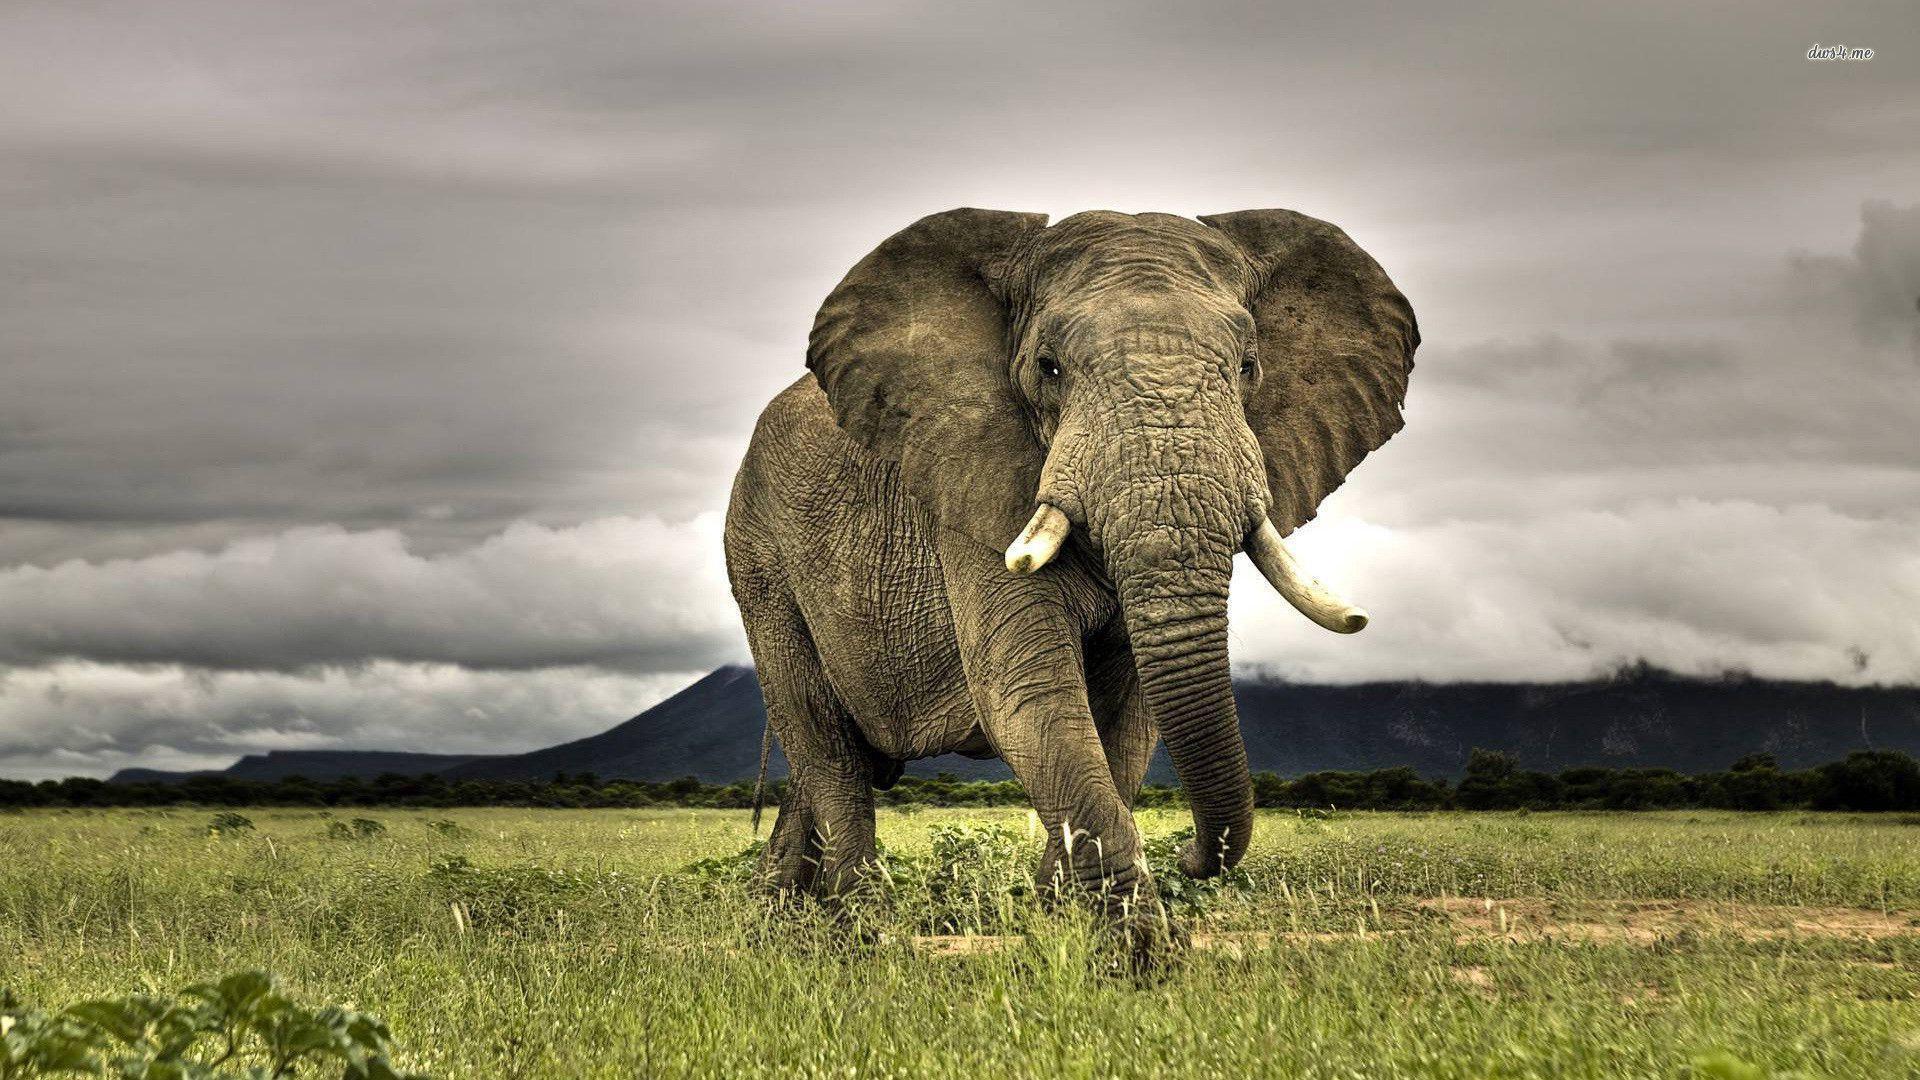 Image For > Elephant Wallpapers Desktop